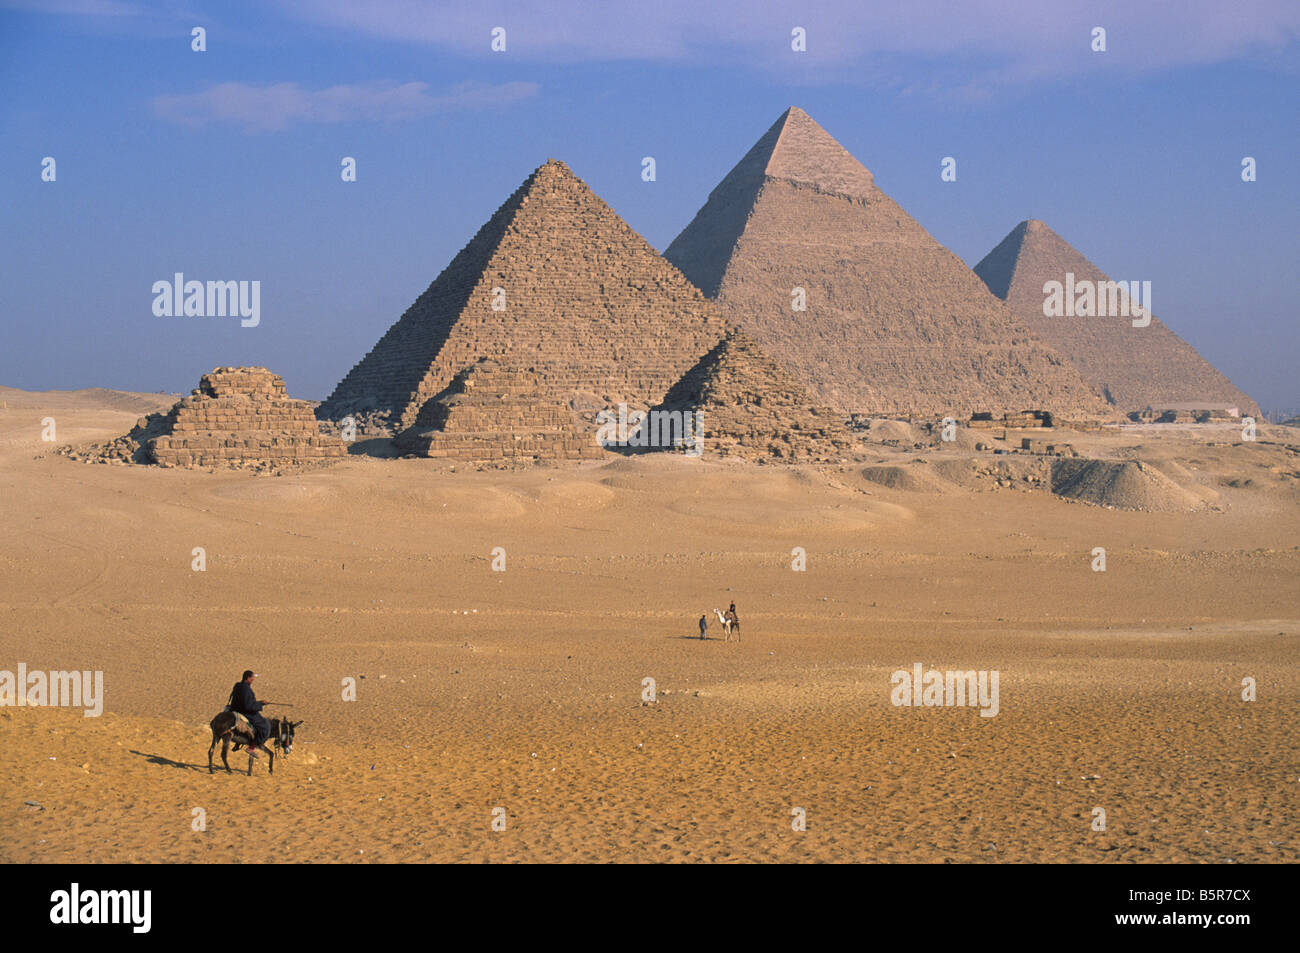 Elk157 1873 Egypt Pyramids of Giza across desert Stock Photo